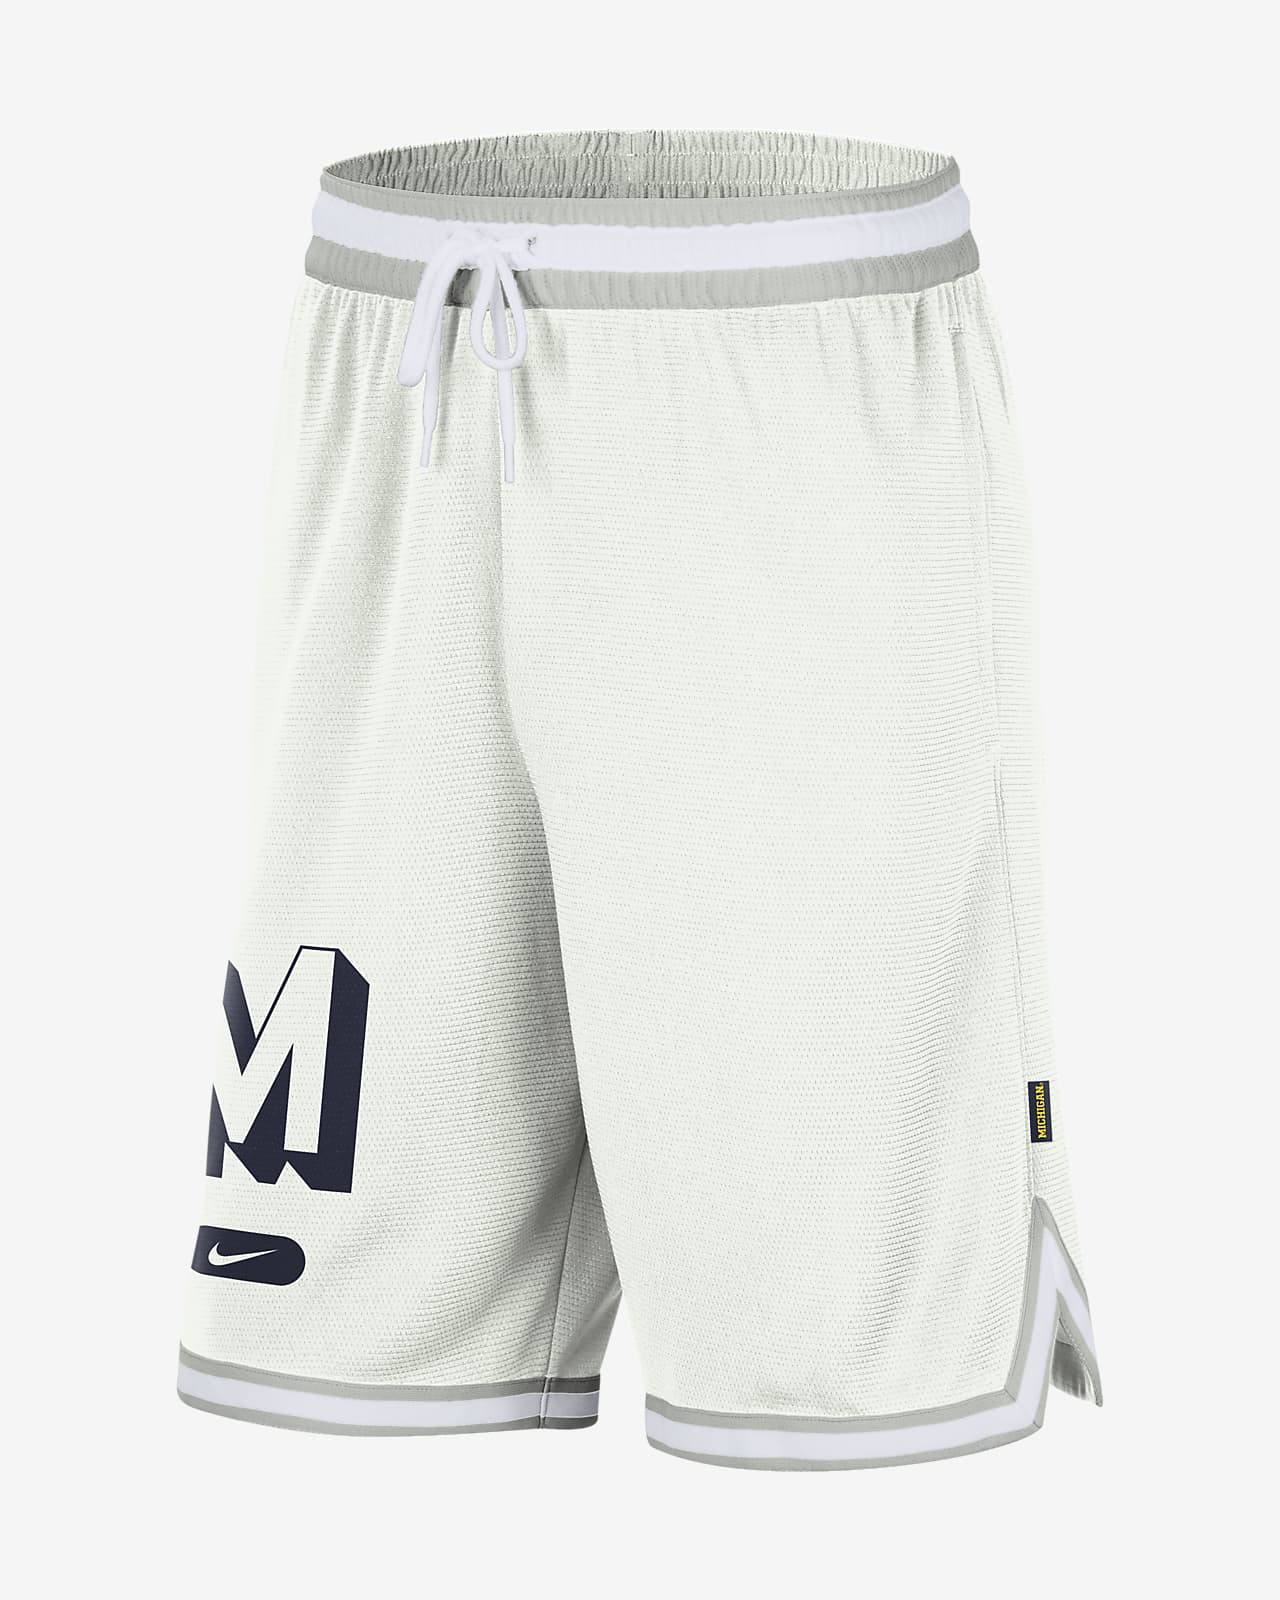 Shorts universitarios Nike Dri-FIT para hombre Michigan DNA 3.0